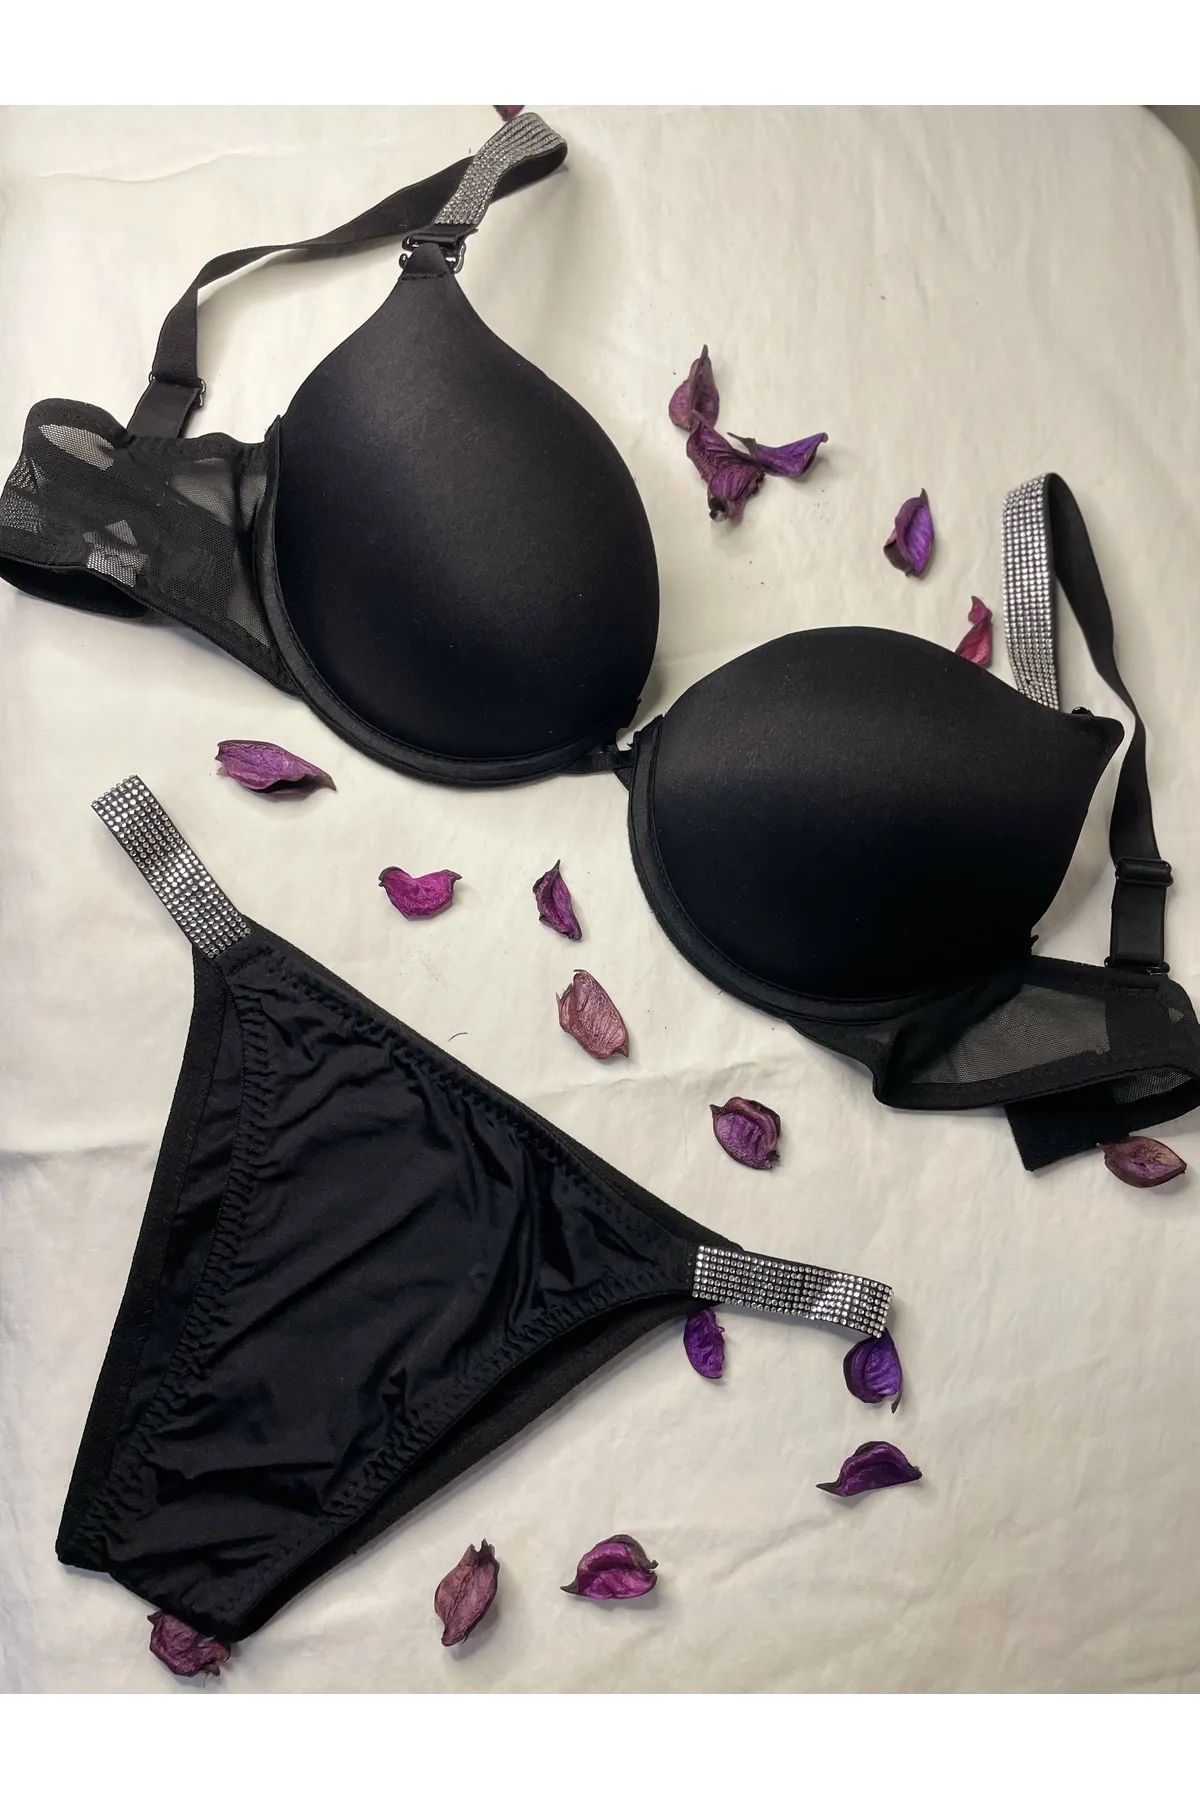 Super Push Up Sexy Bras Set Transparent Underwear Lingerie Lace Bra &  Matching Panty for Women, black : : Fashion